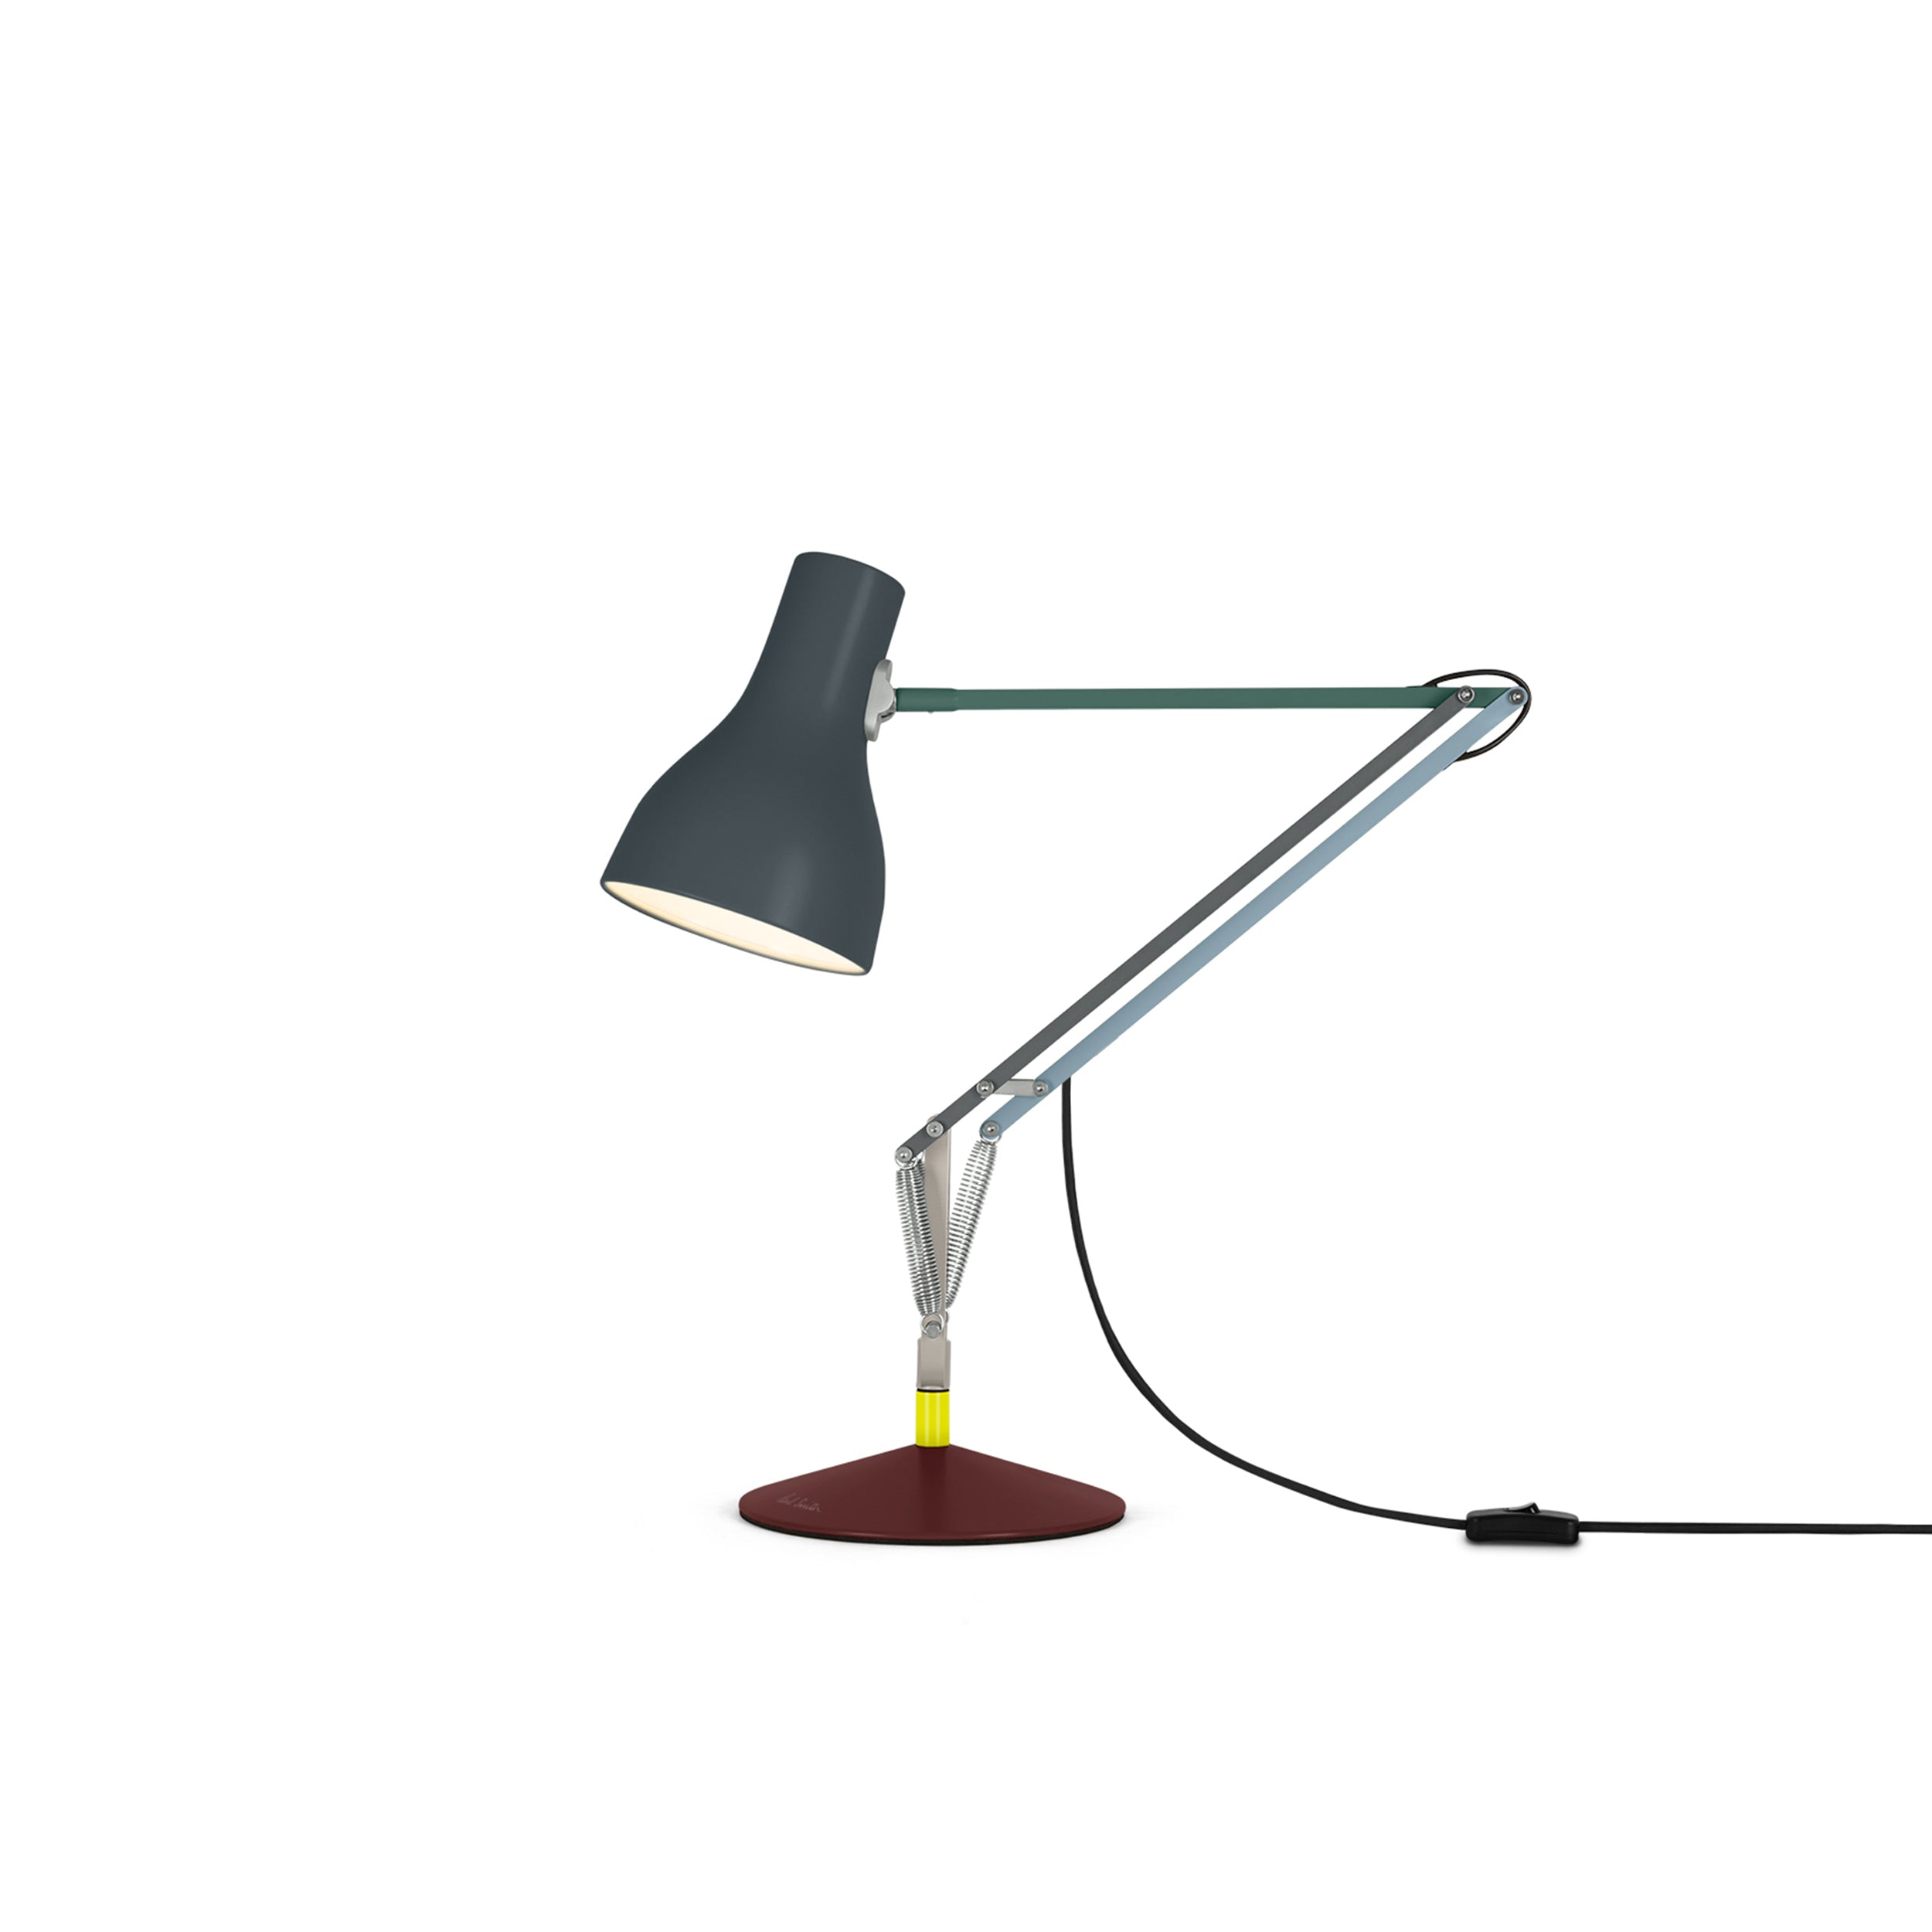 Type 75 Desk Lamp: Paul Smith Edition Four